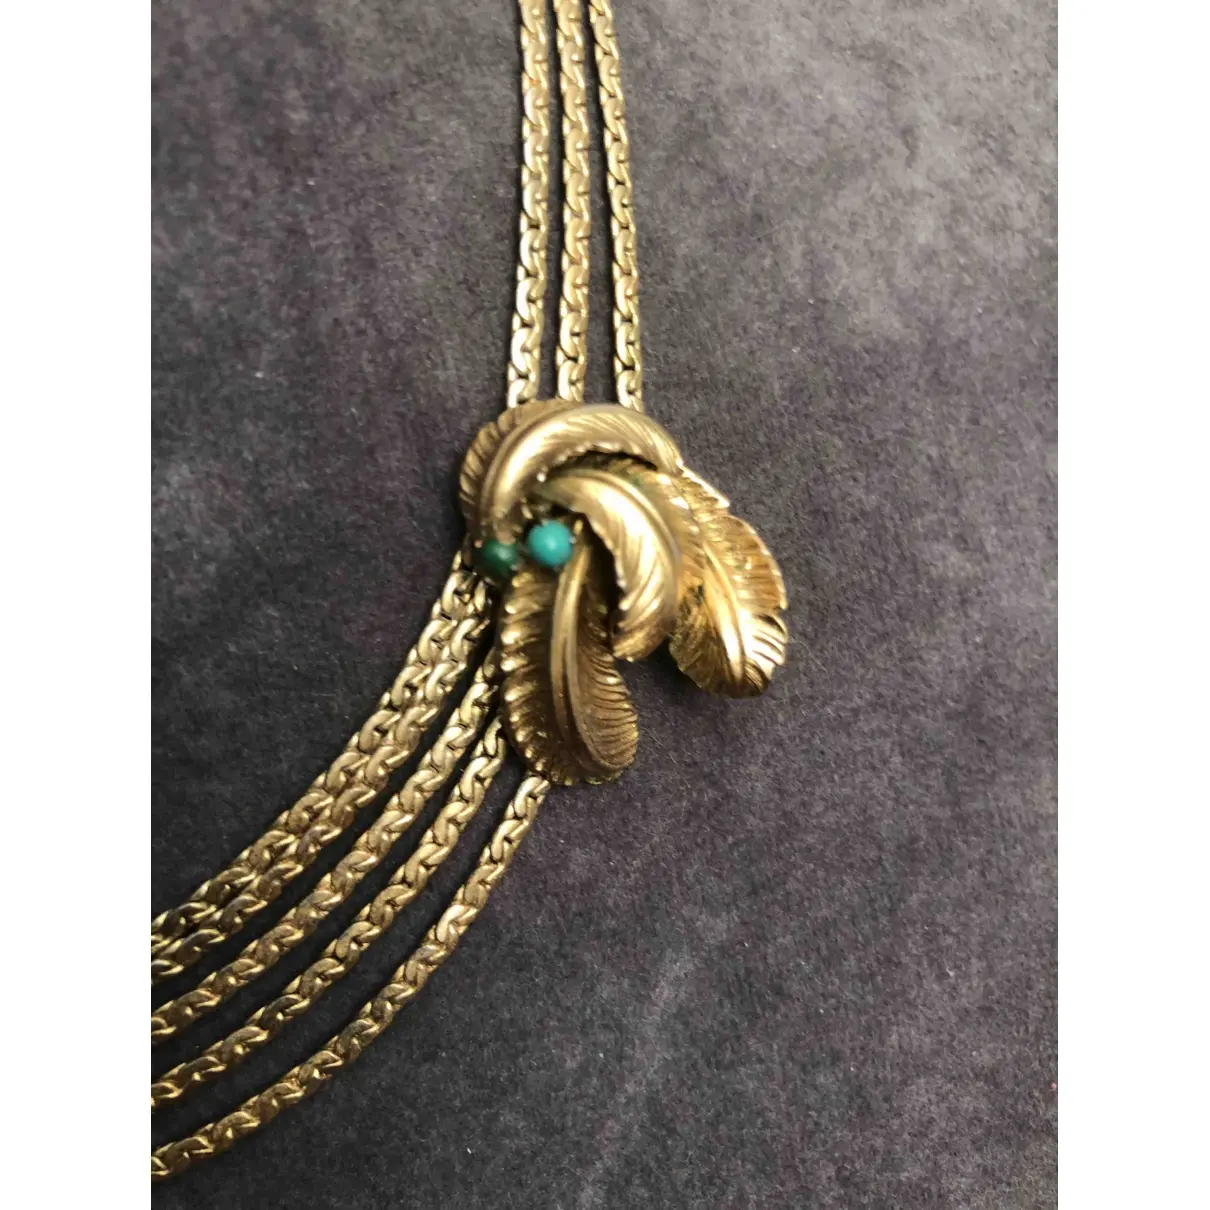 Buy Grosse Necklace online